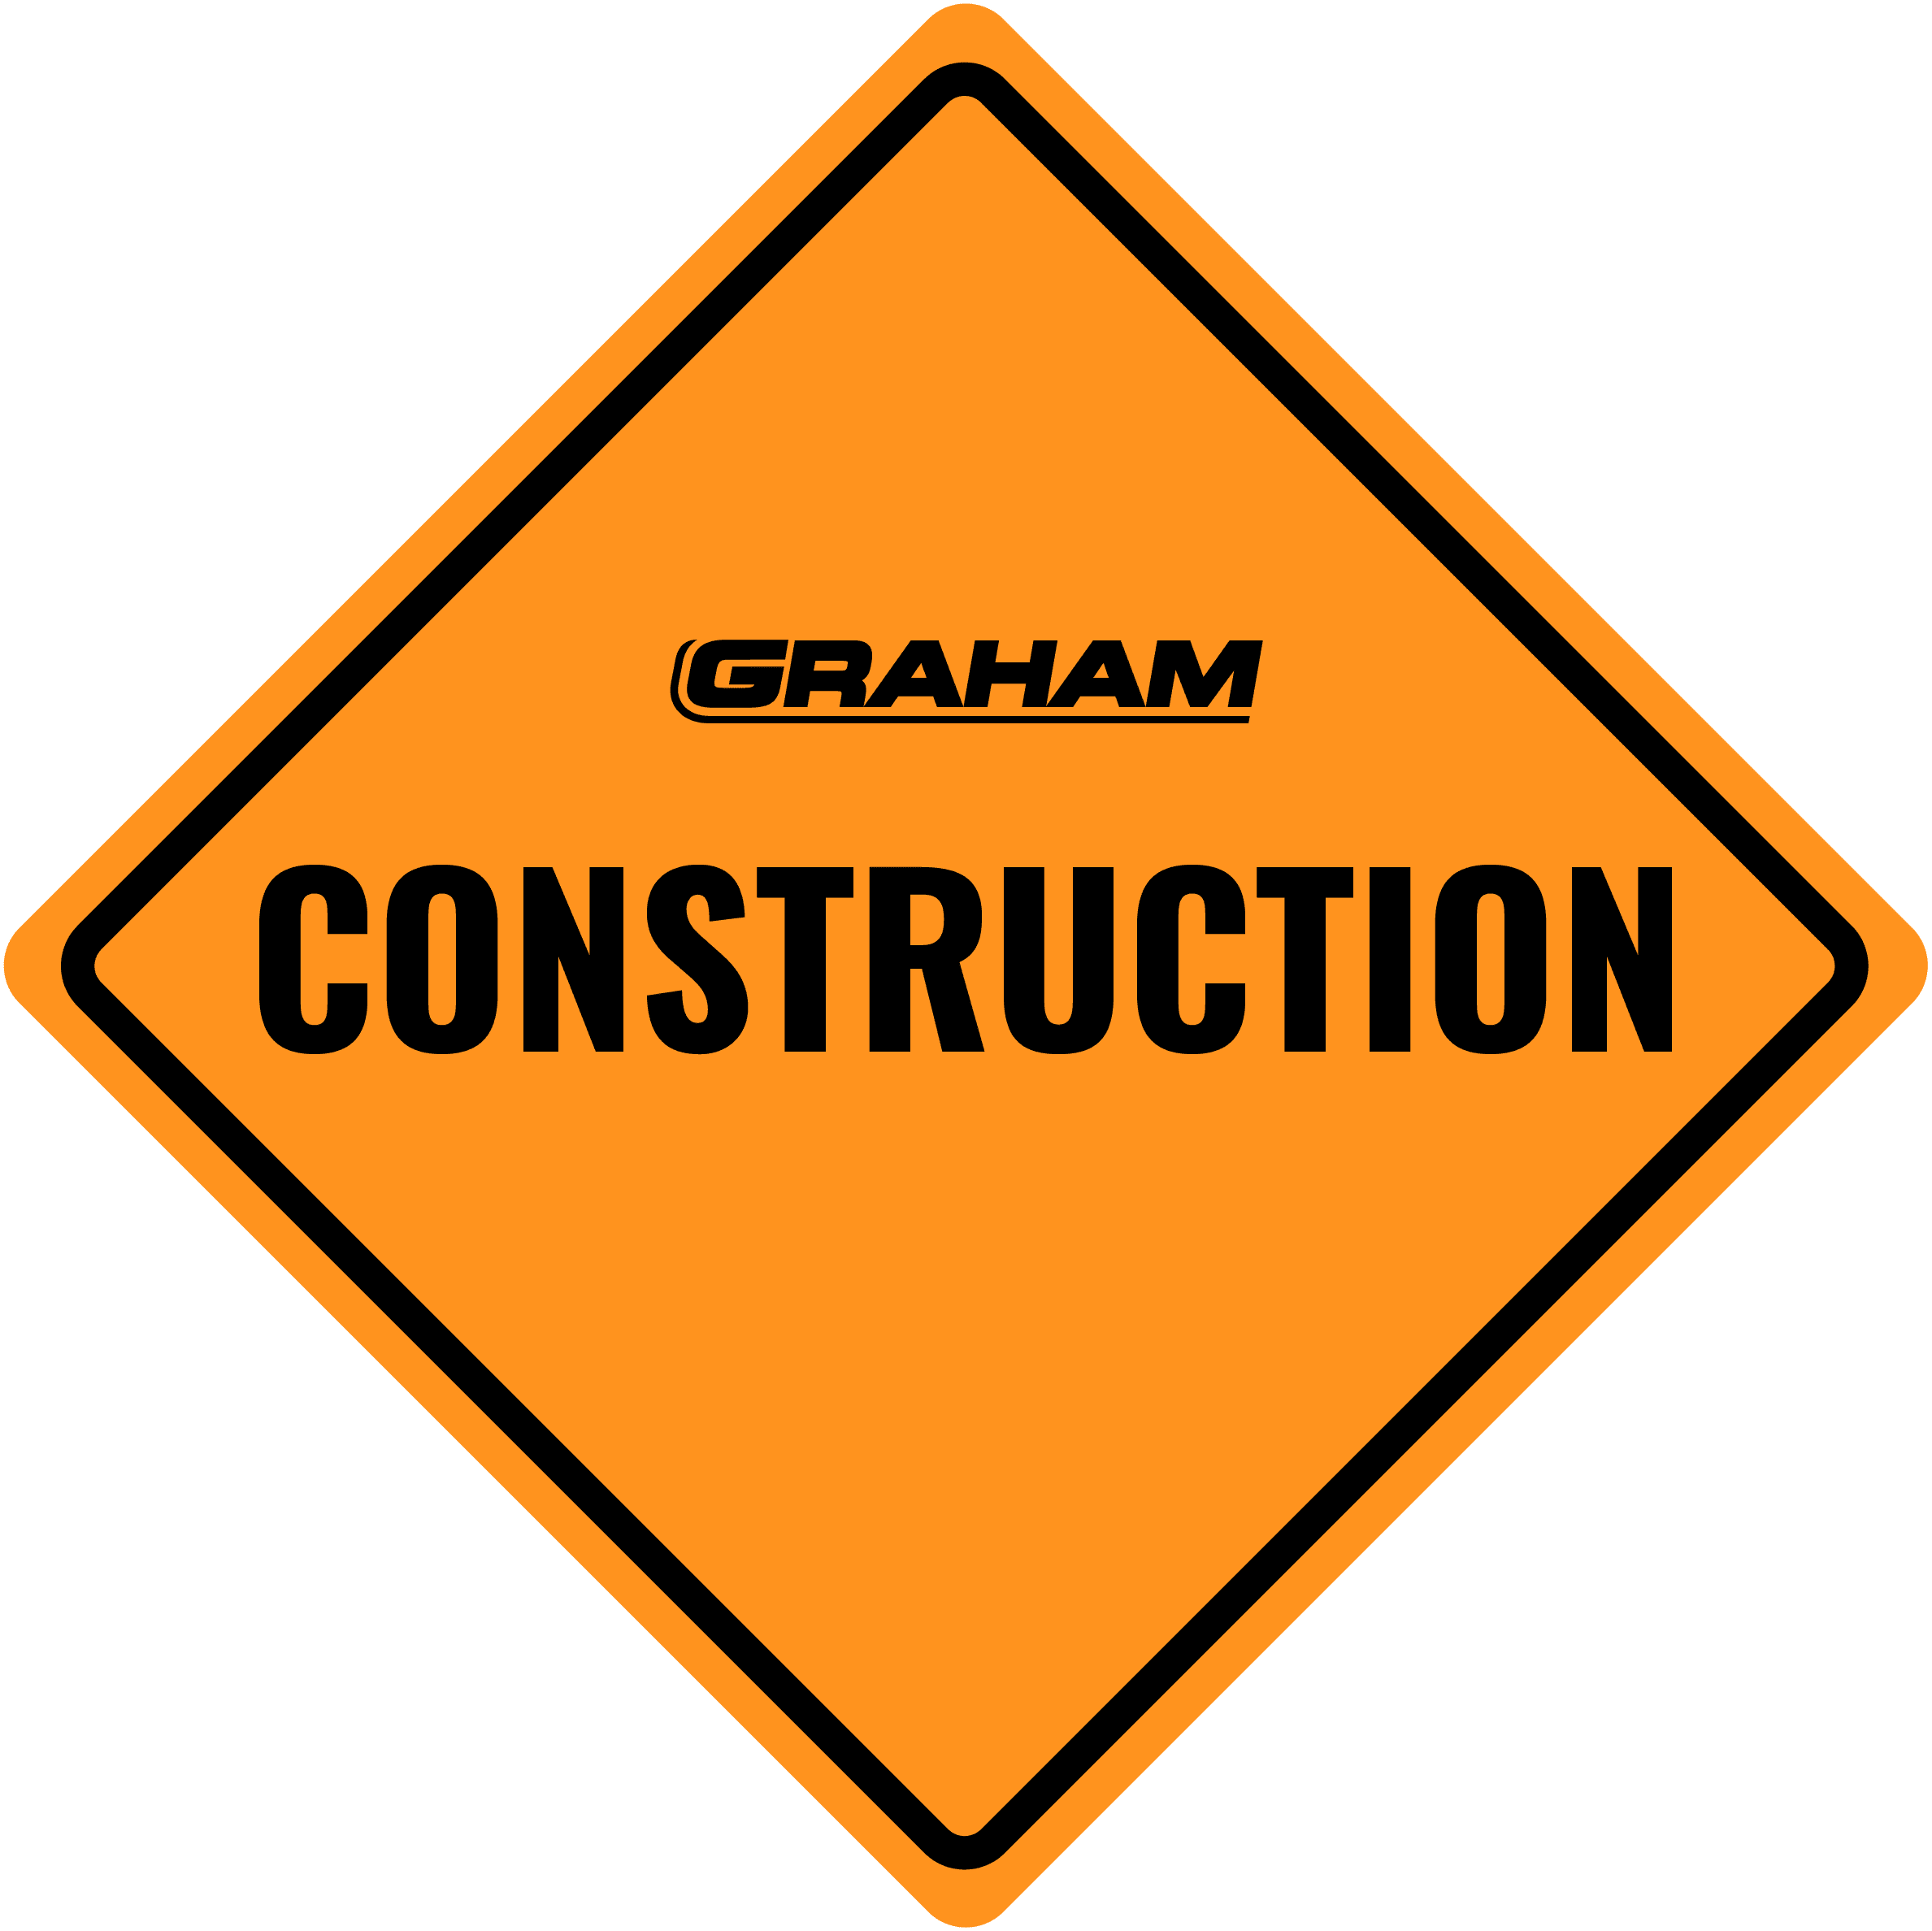 Graham Construction sign